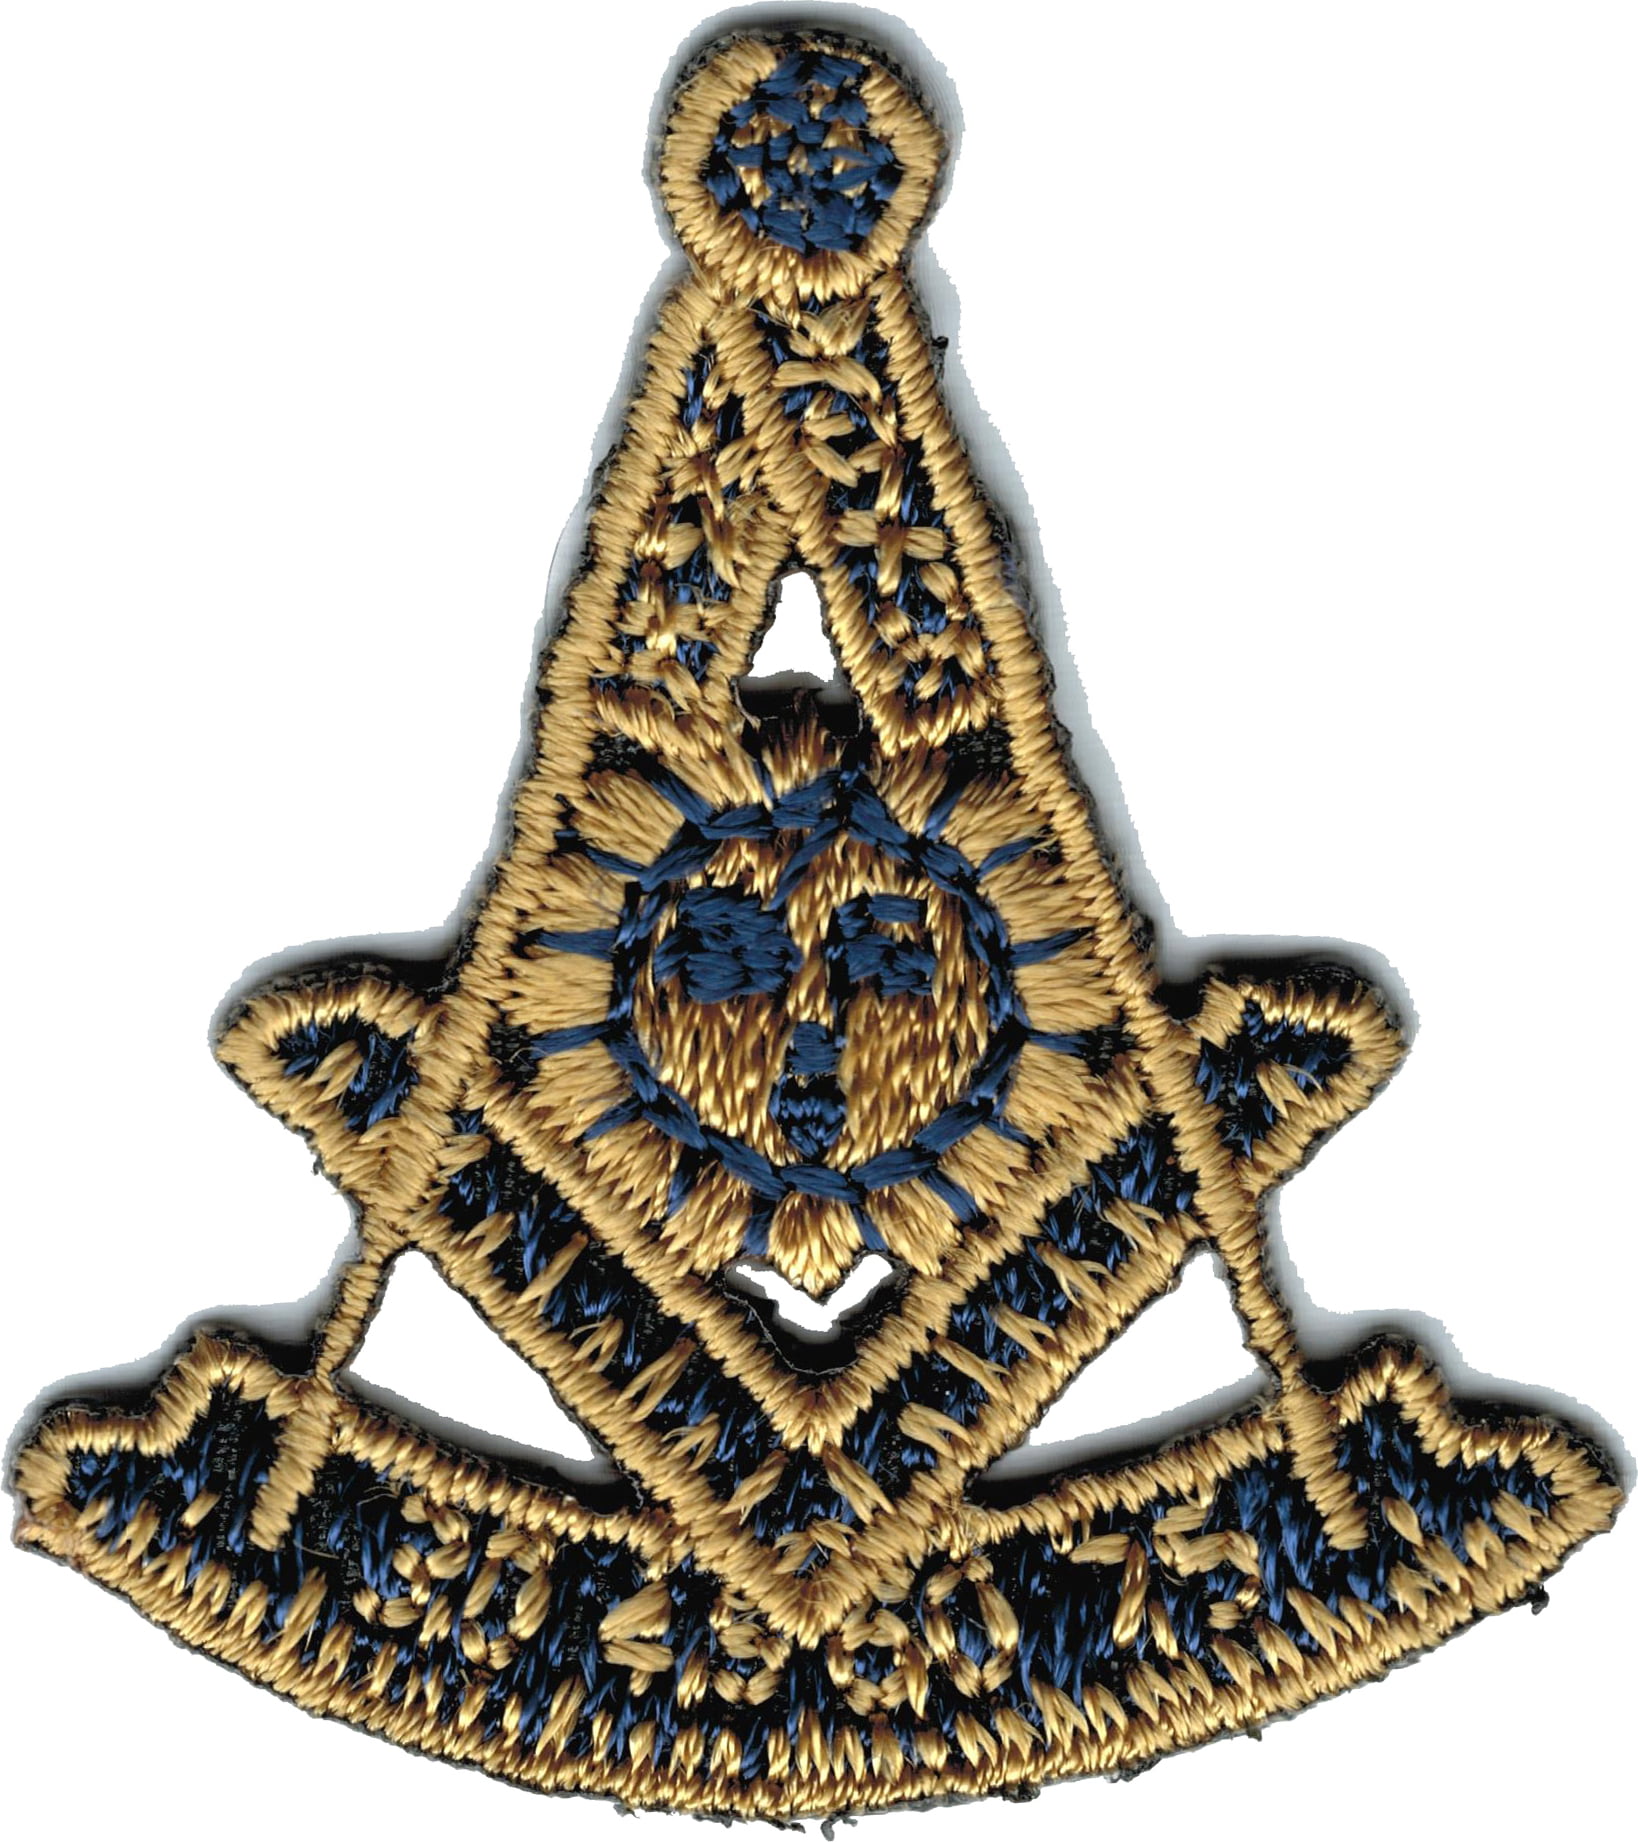 Freemason Masonic Gold and Black Iron on Patch – Mason Square Market